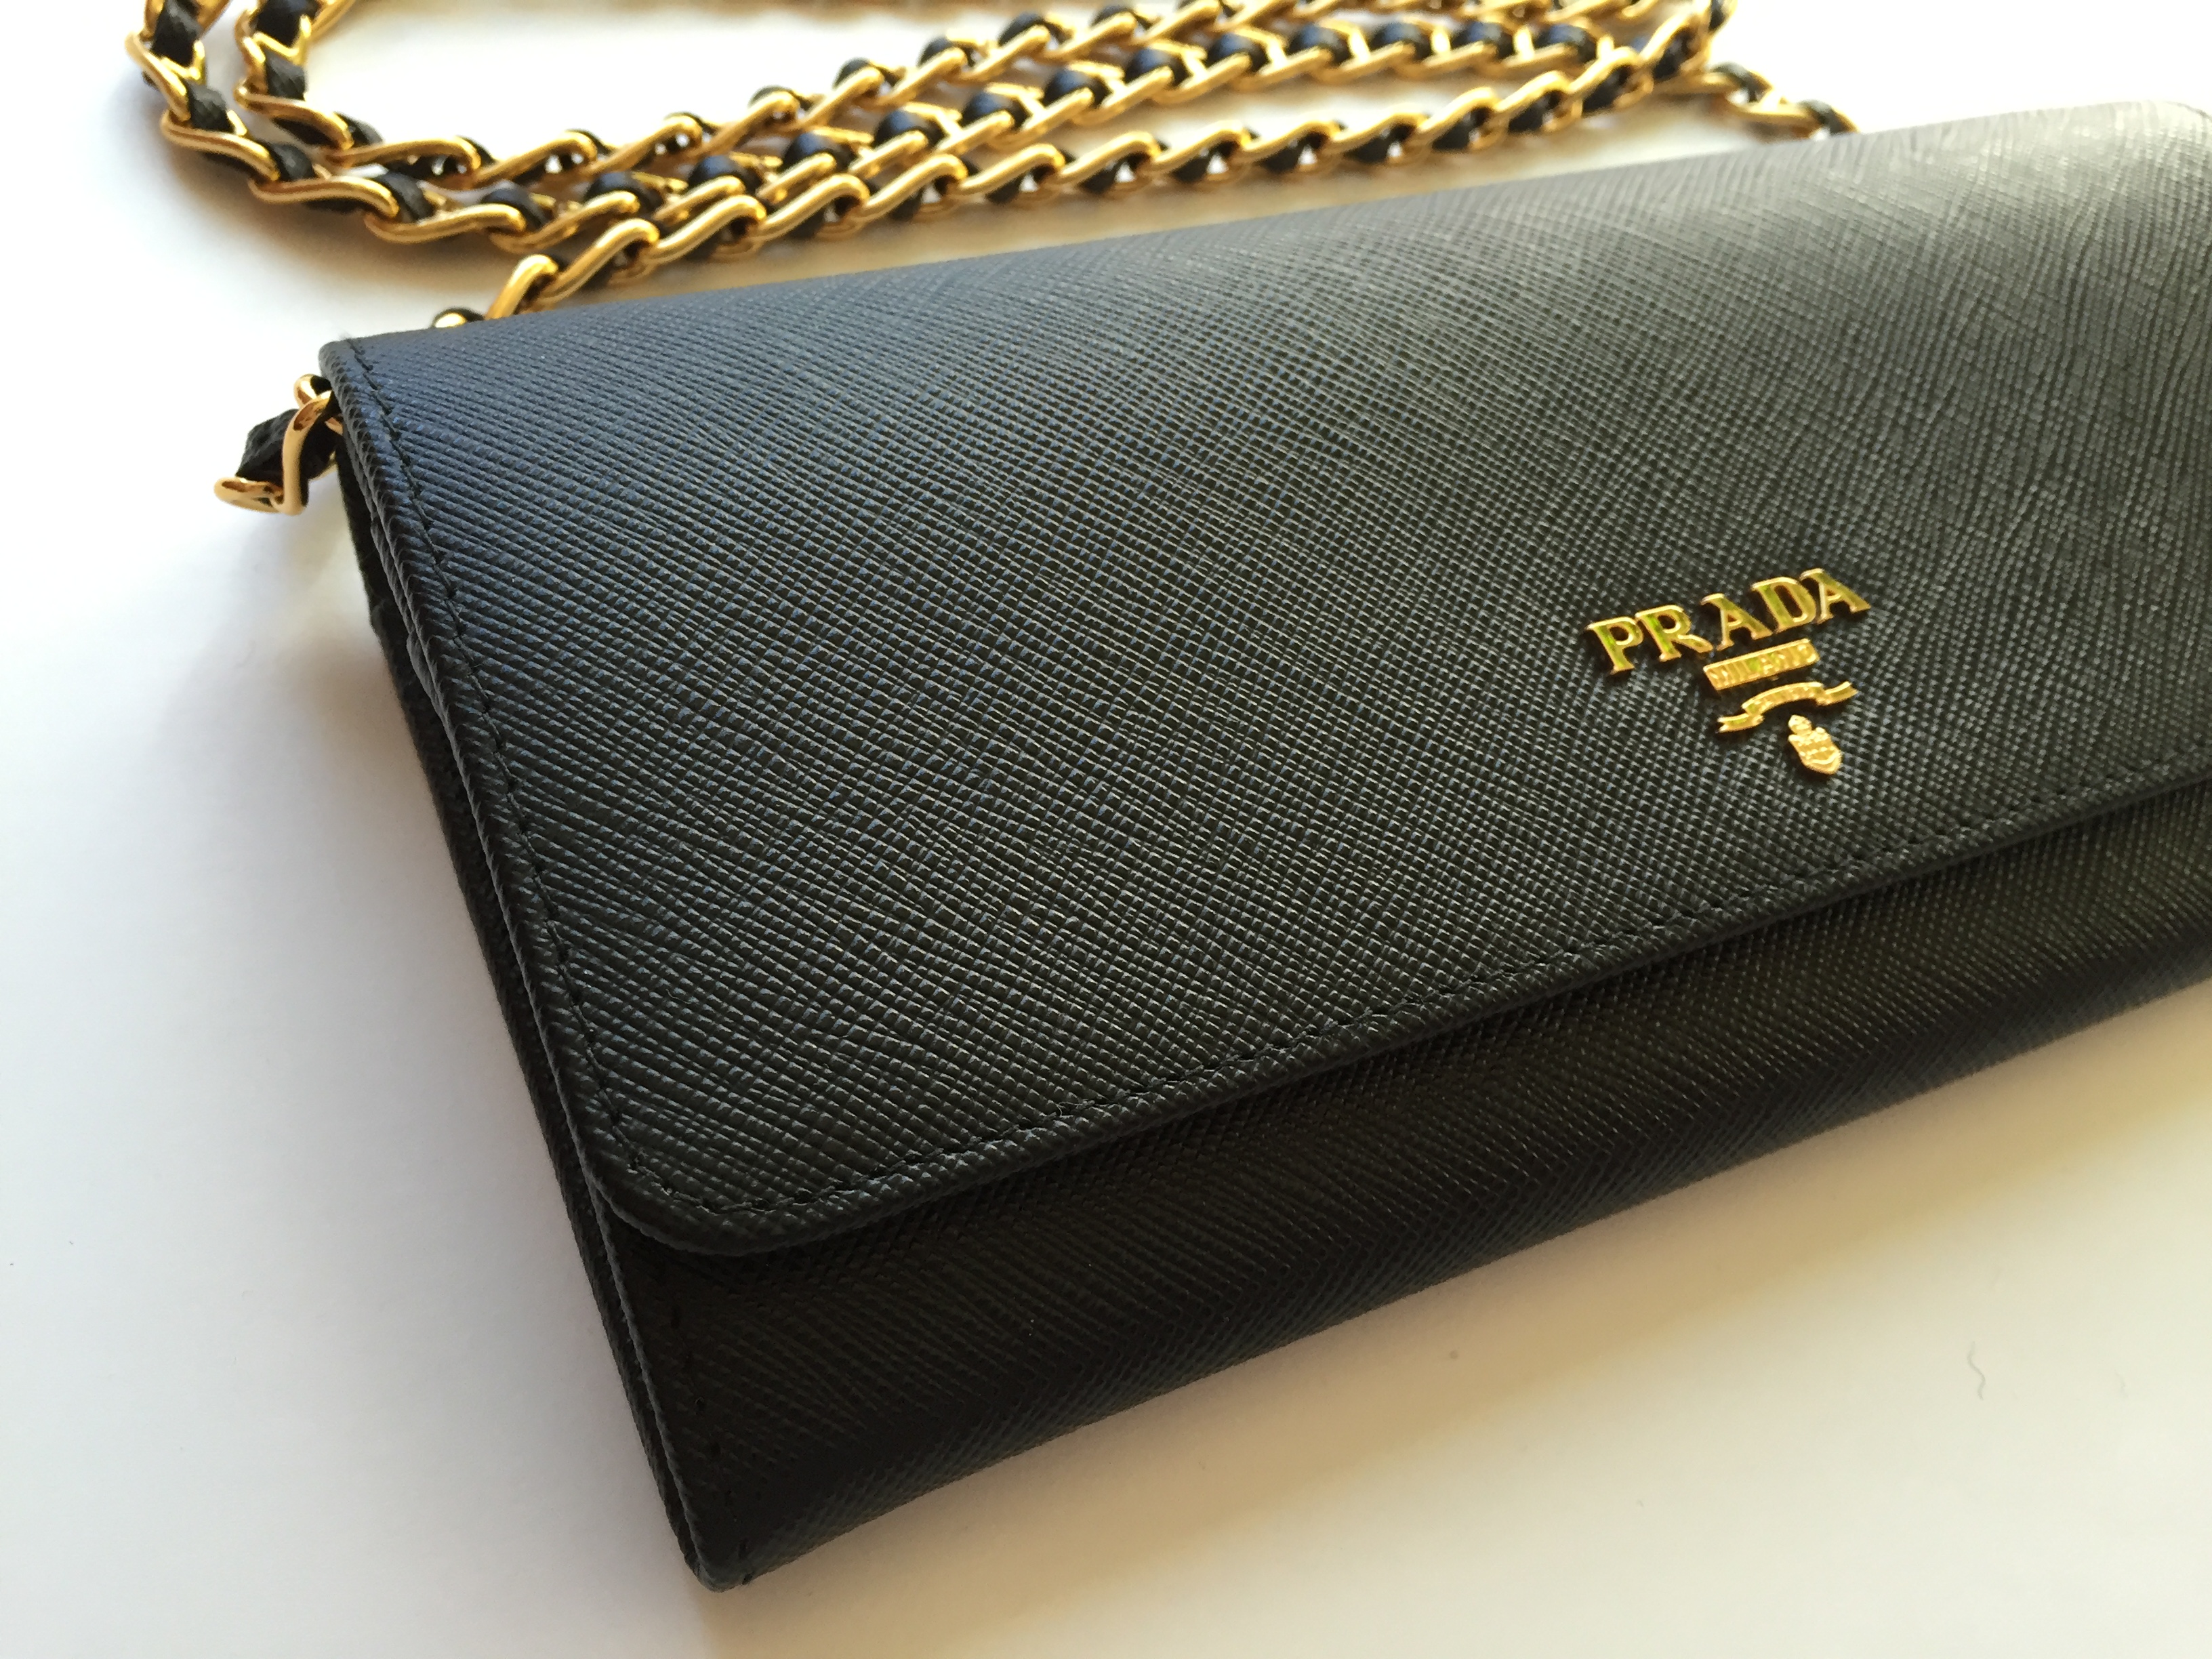 Prada | Bags | Prada Saffiano Leather Wallet Black | Poshmark